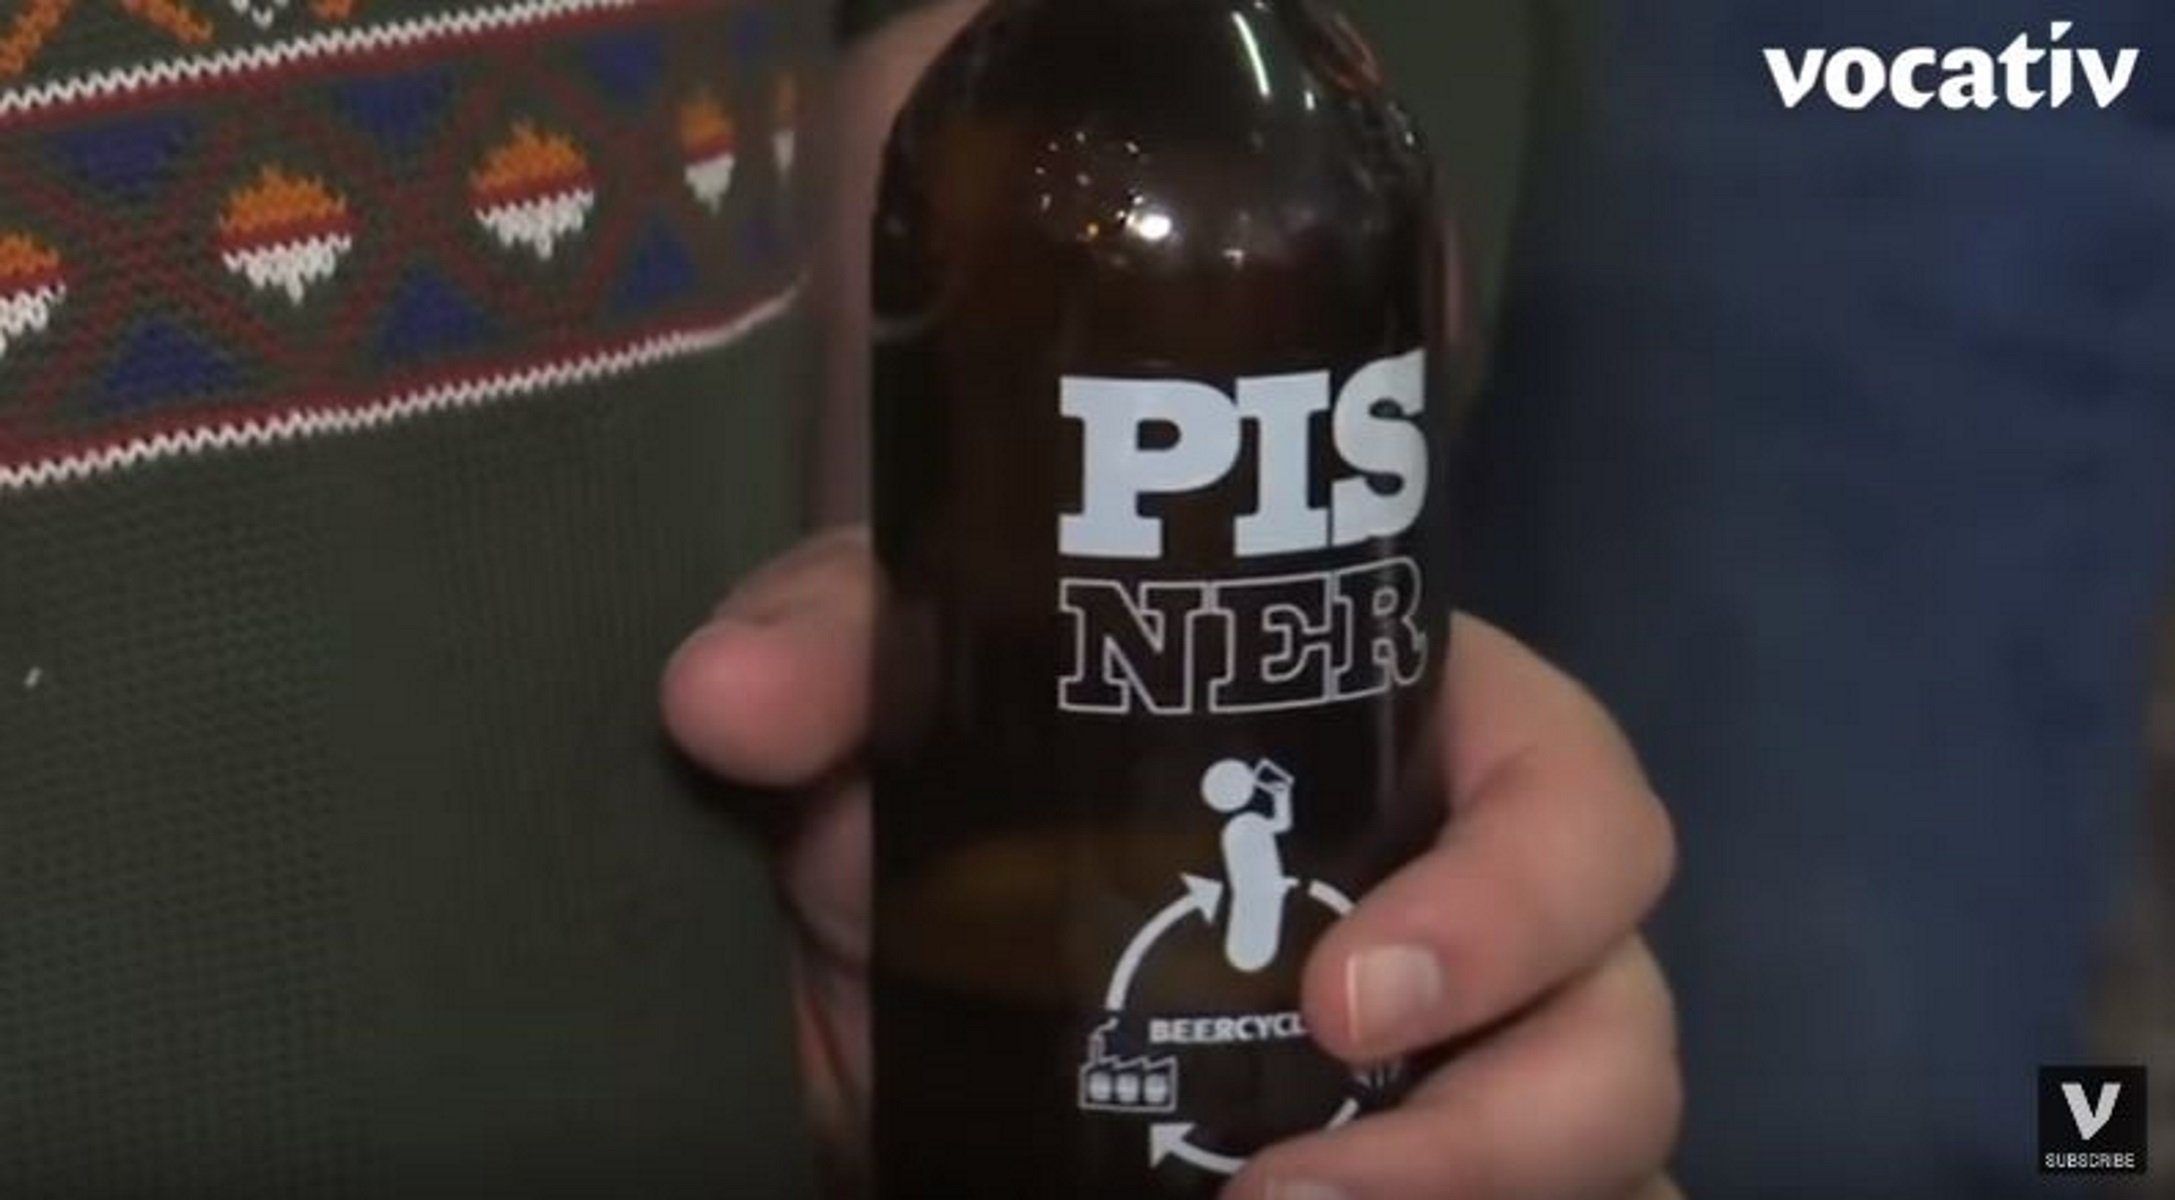 Pisner, la cerveza danesa hecha con orina